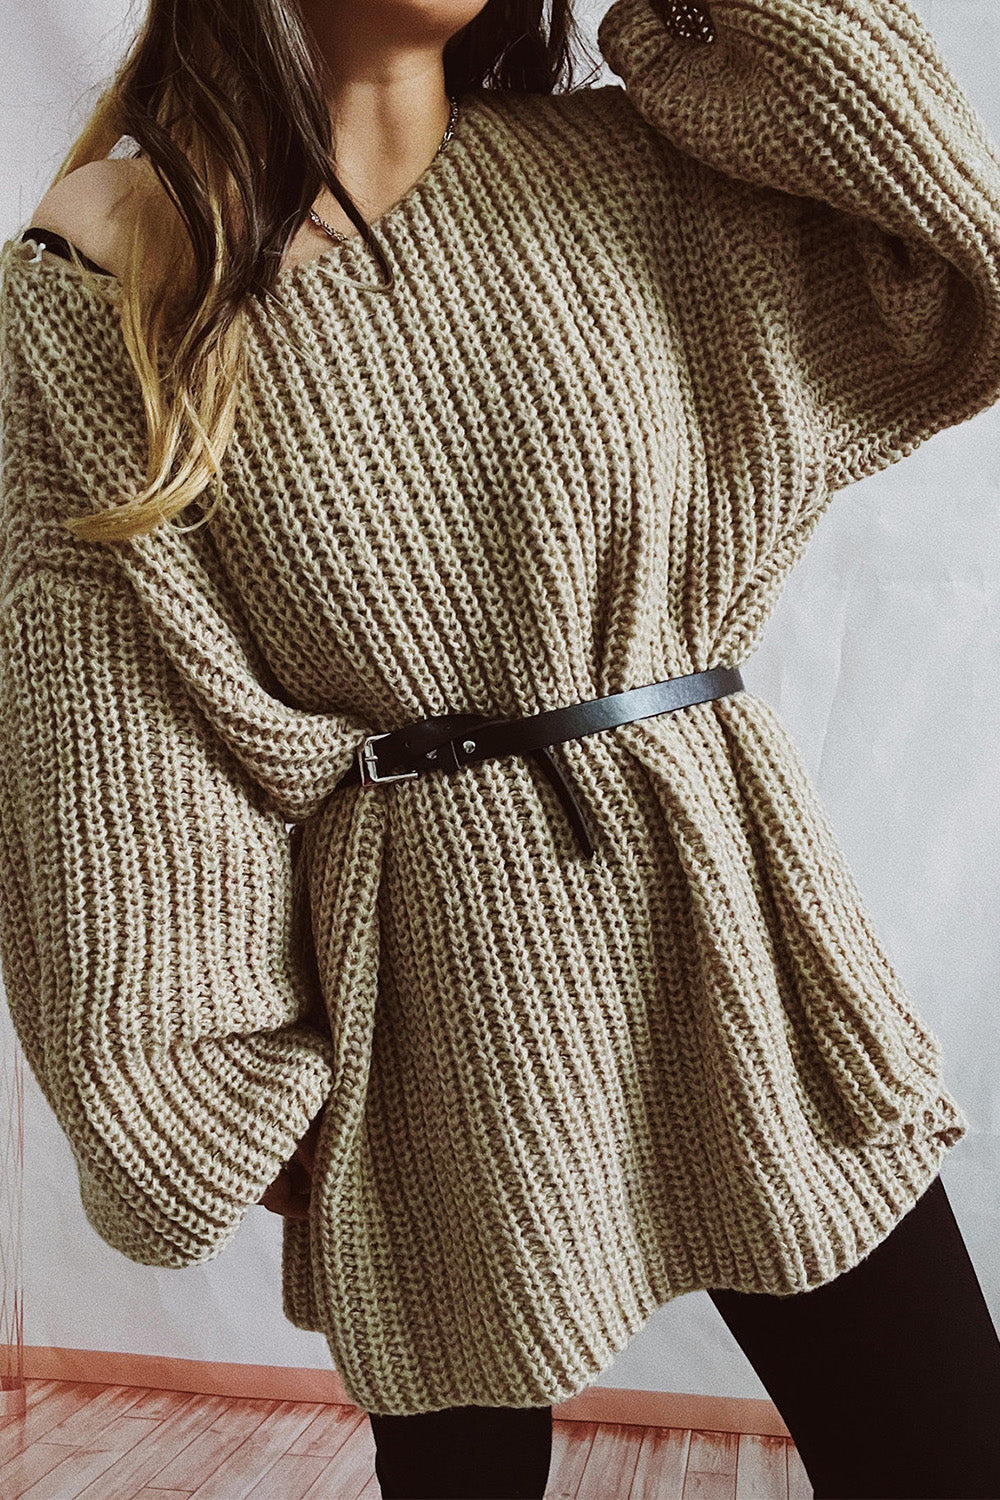 Celosia Sweater Dress